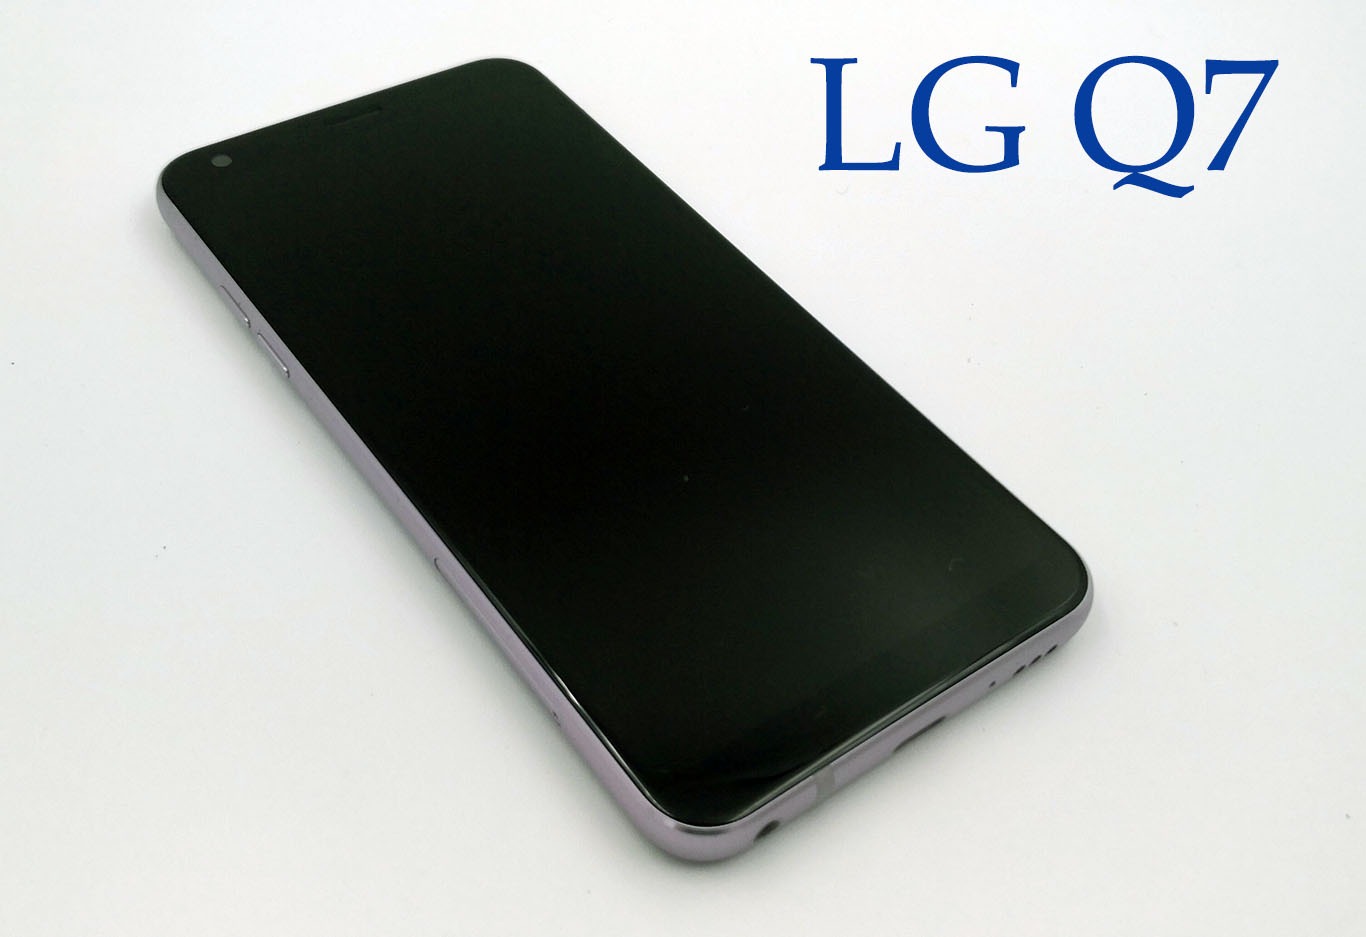 LG Q7, lo hemos probado